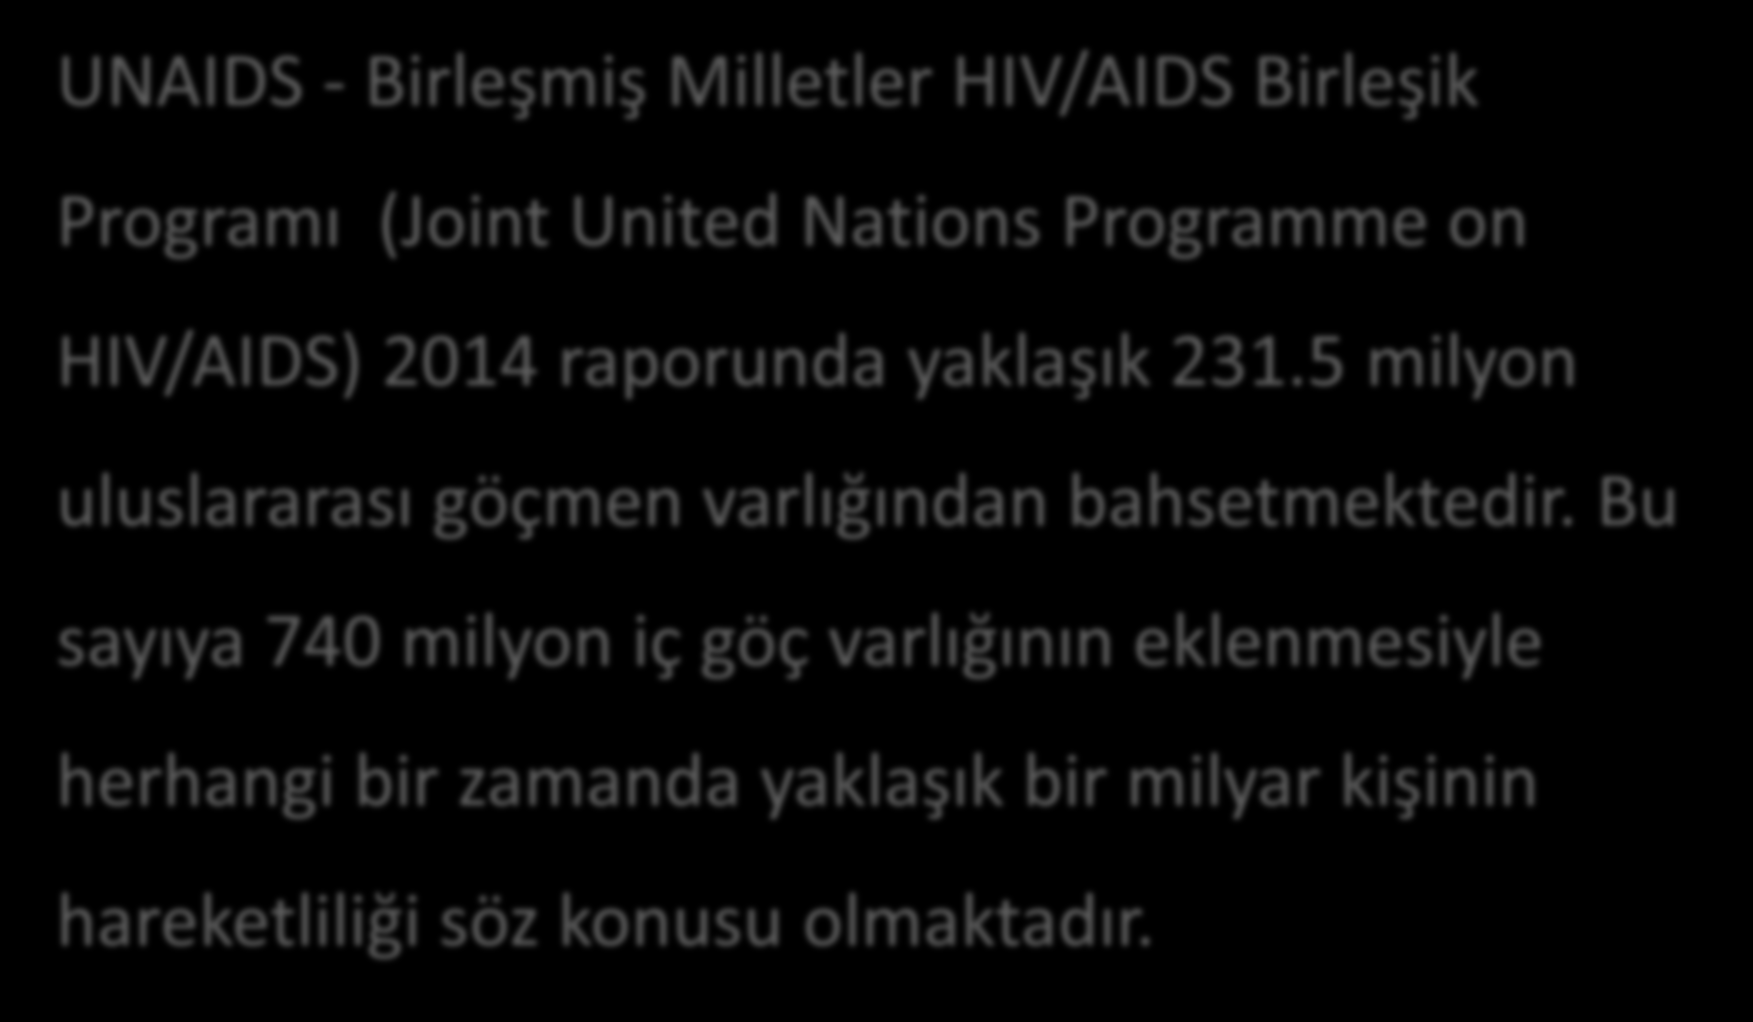 UNAIDS - Birleşmiş Milletler HIV/AIDS Birleşik Programı (Joint United Nations Programme on HIV/AIDS) 2014 raporunda yaklaşık 231.